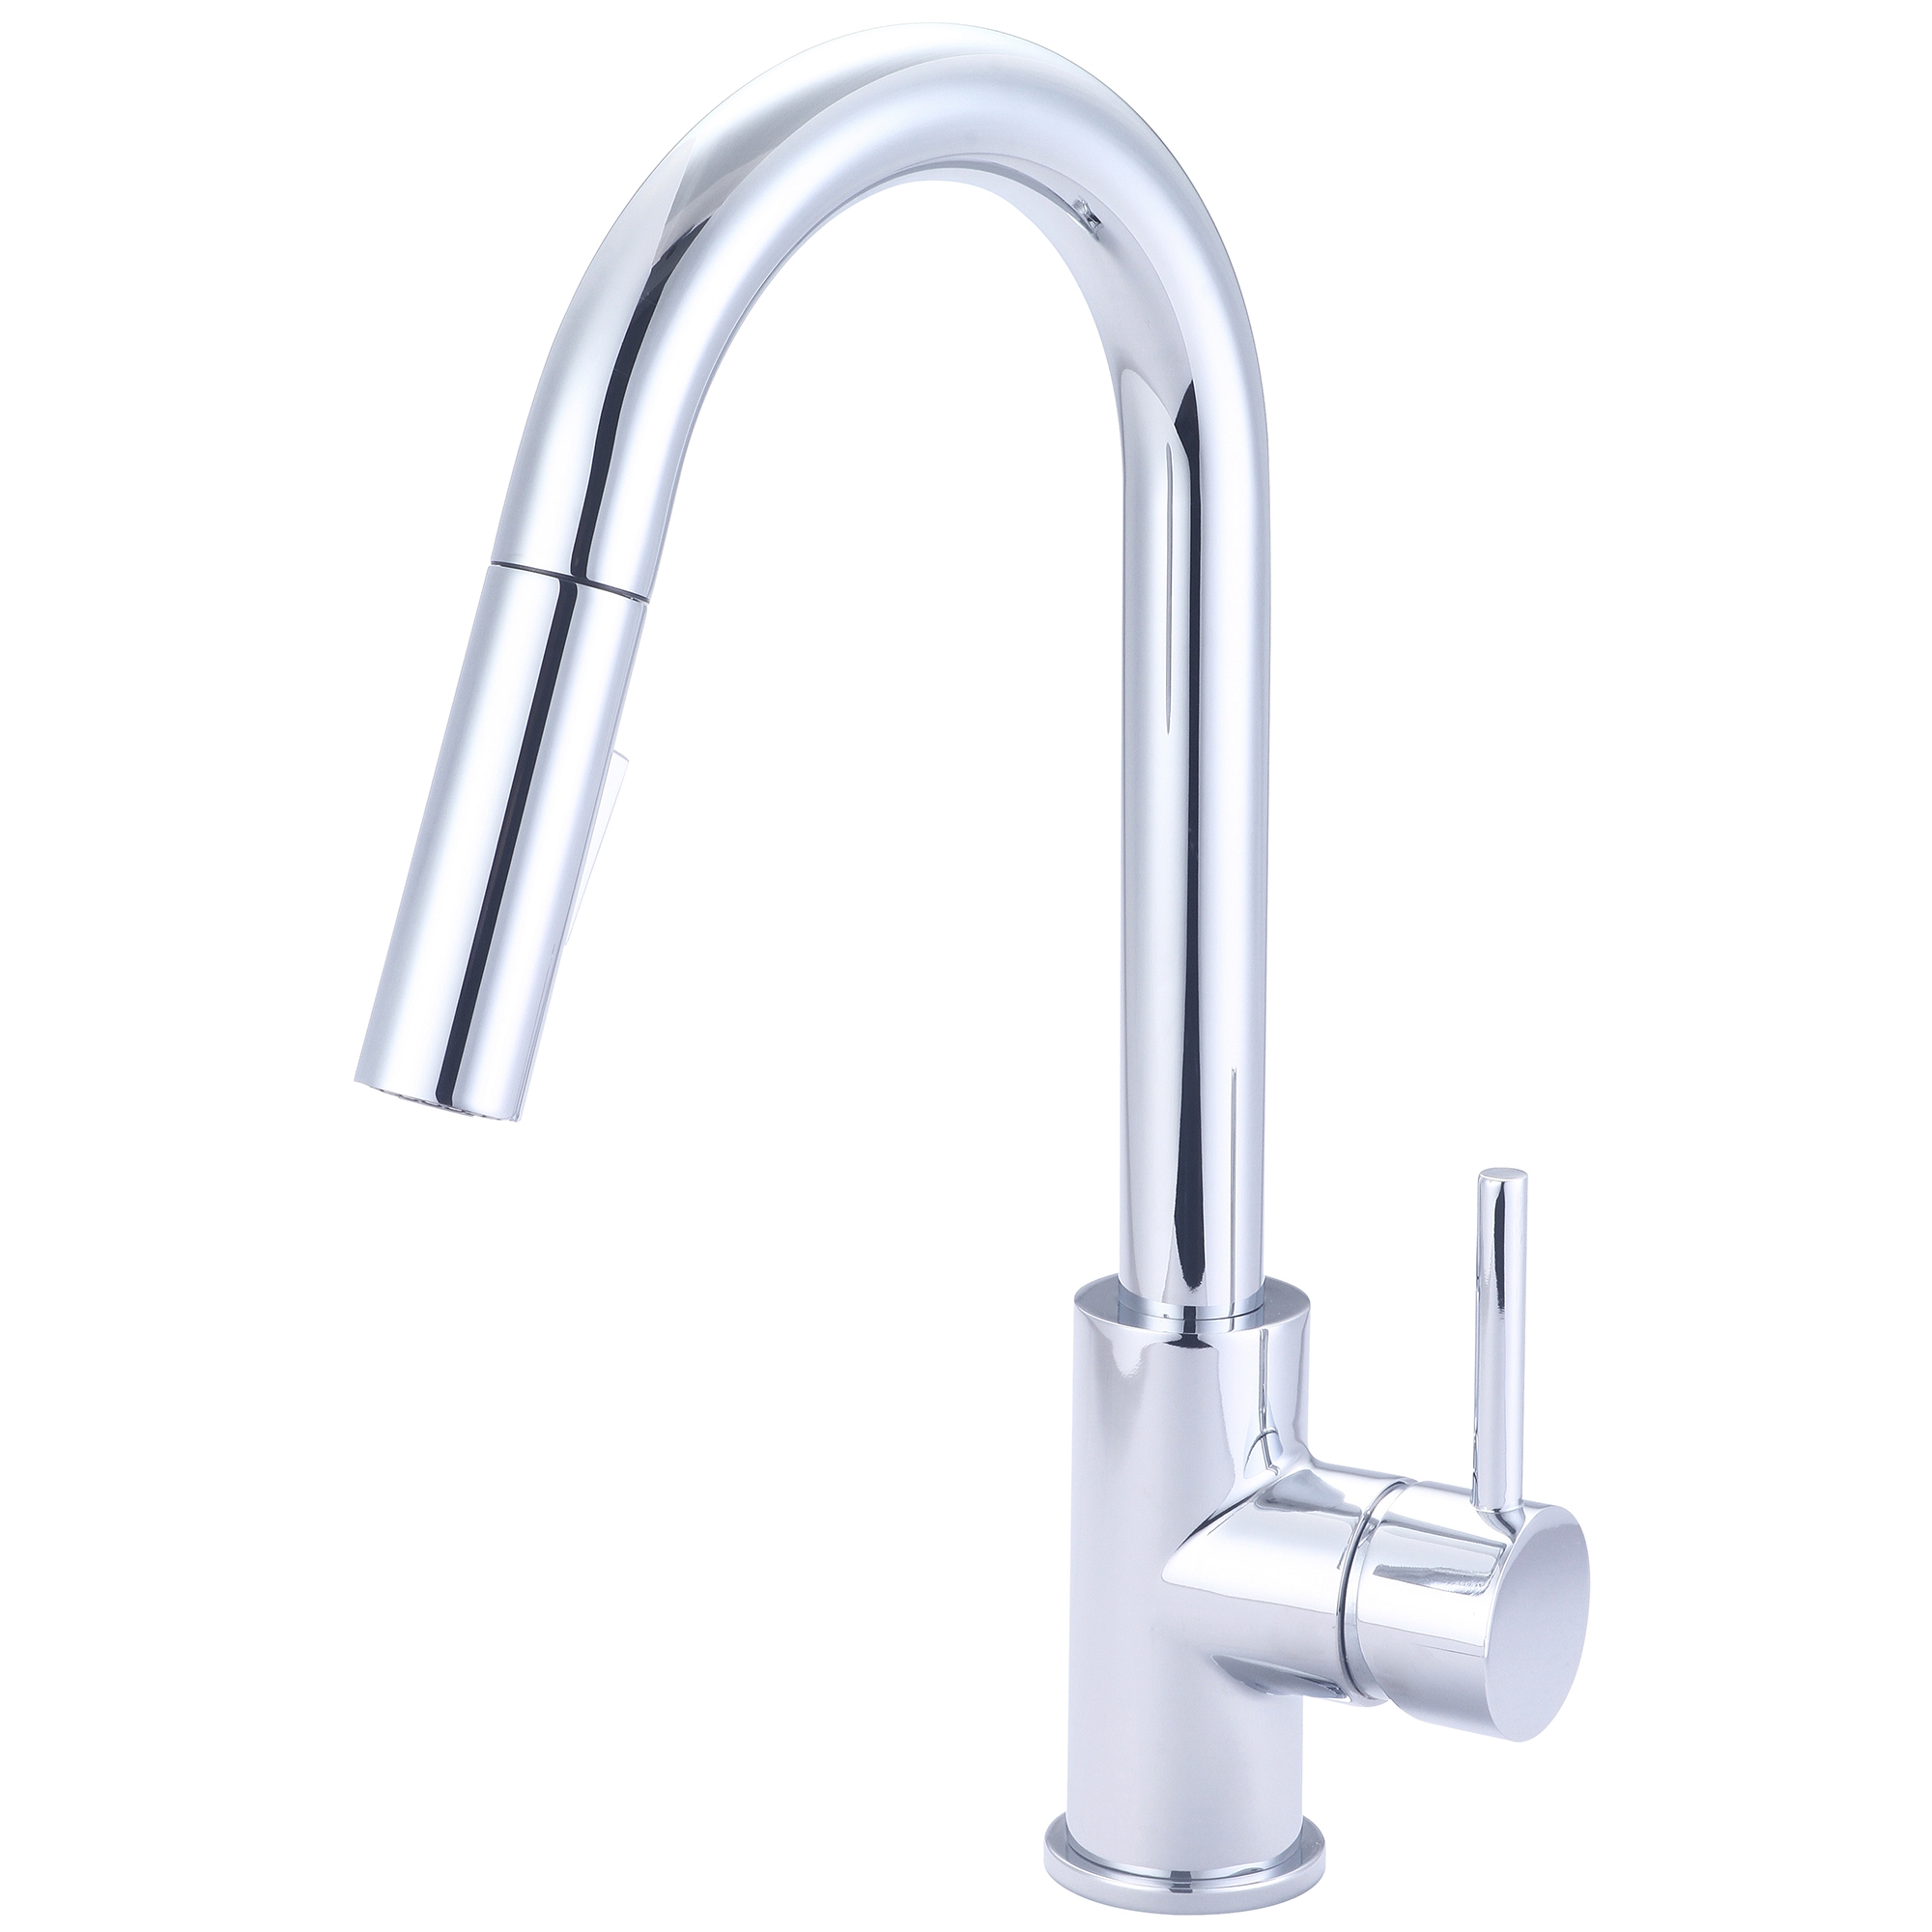 New Olympia i2 Model K-5080 Single-Handle Kitchen Faucet